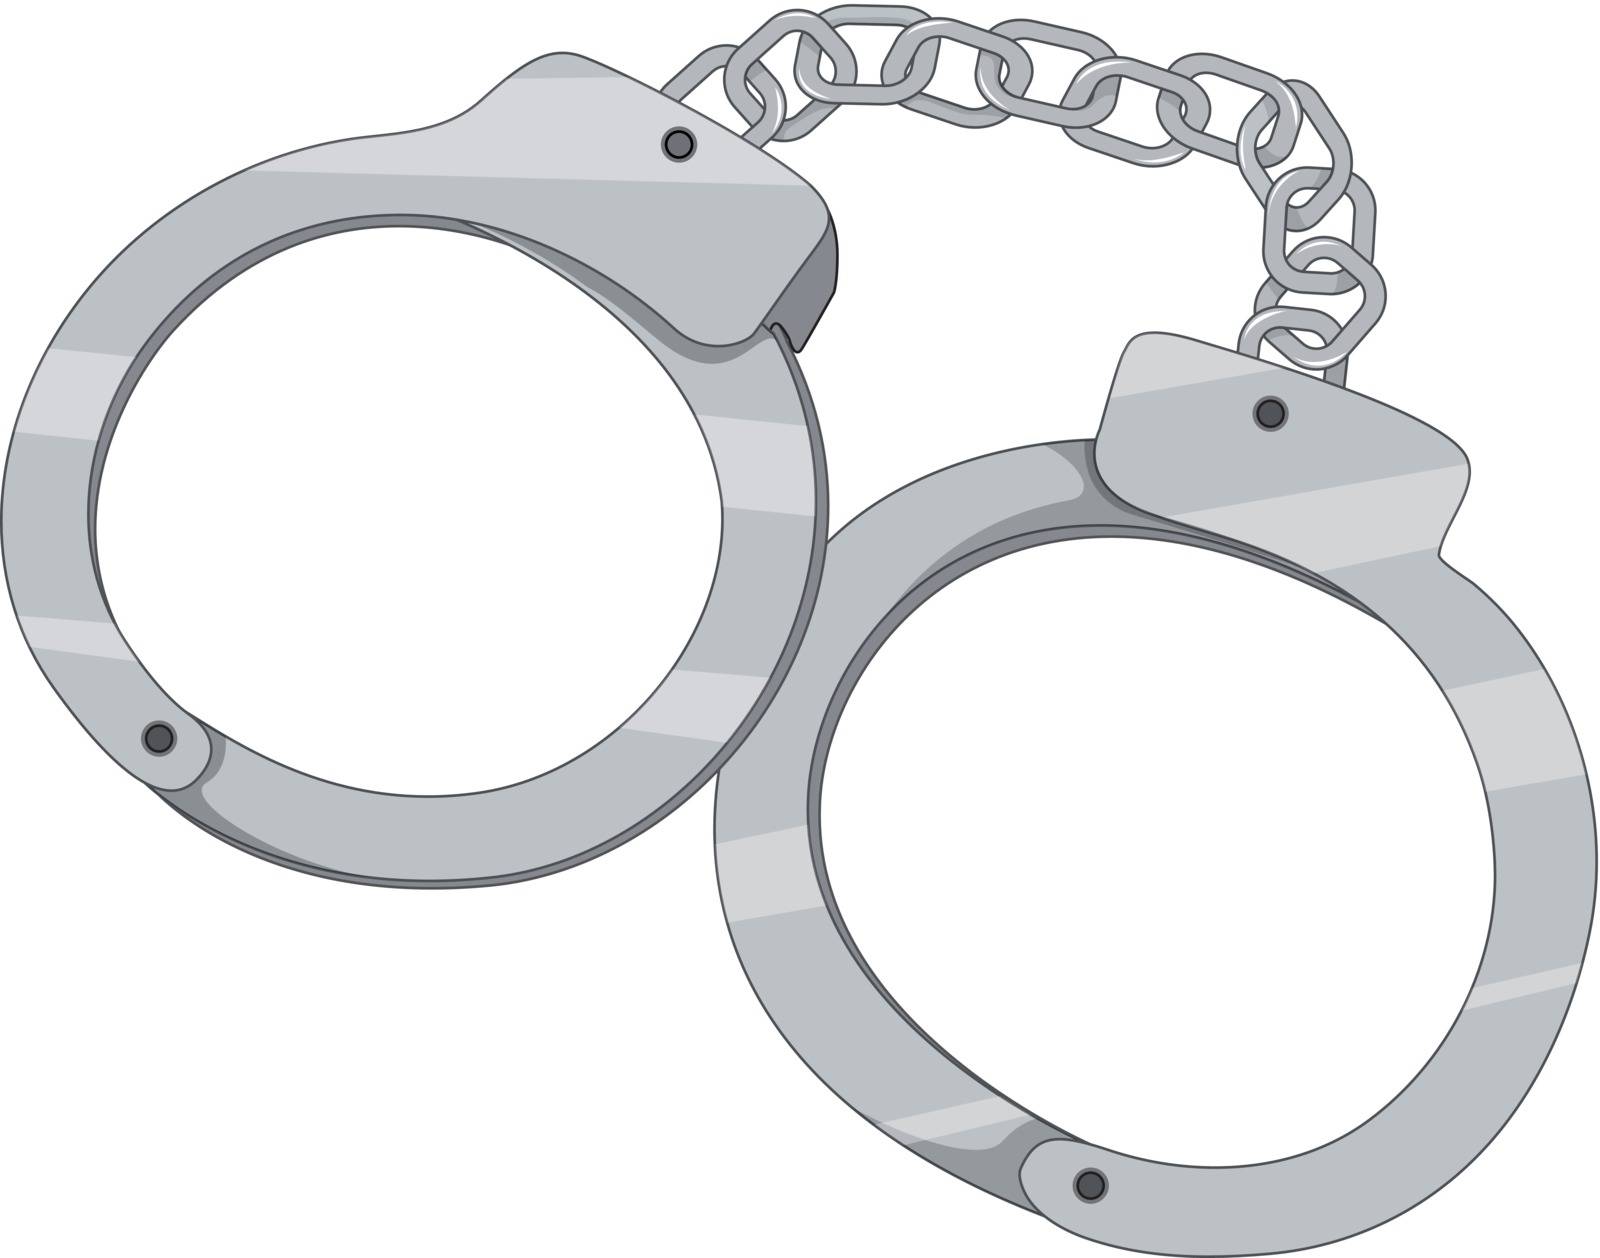 Illustration of set of handcuffs